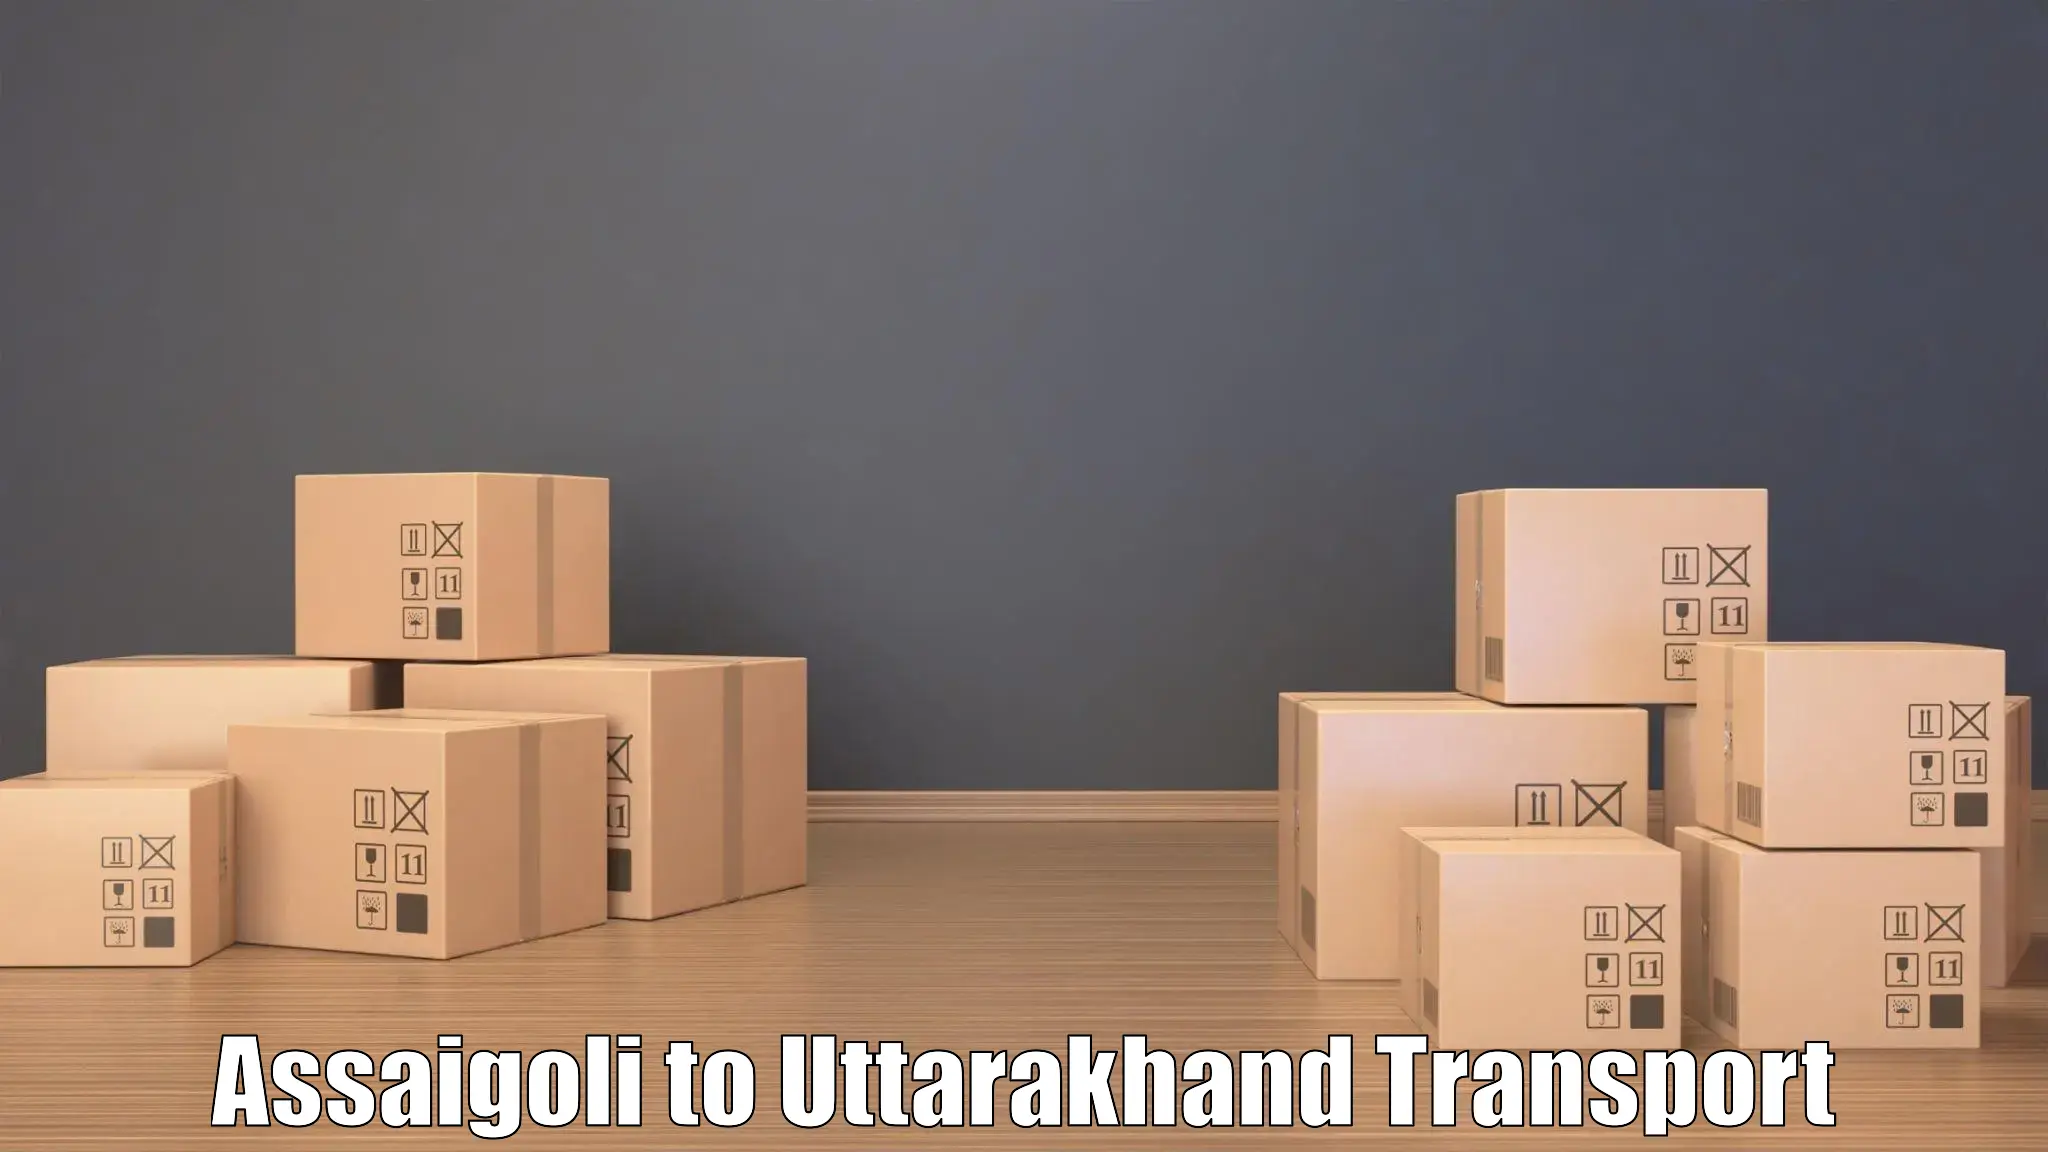 Truck transport companies in India Assaigoli to Champawat